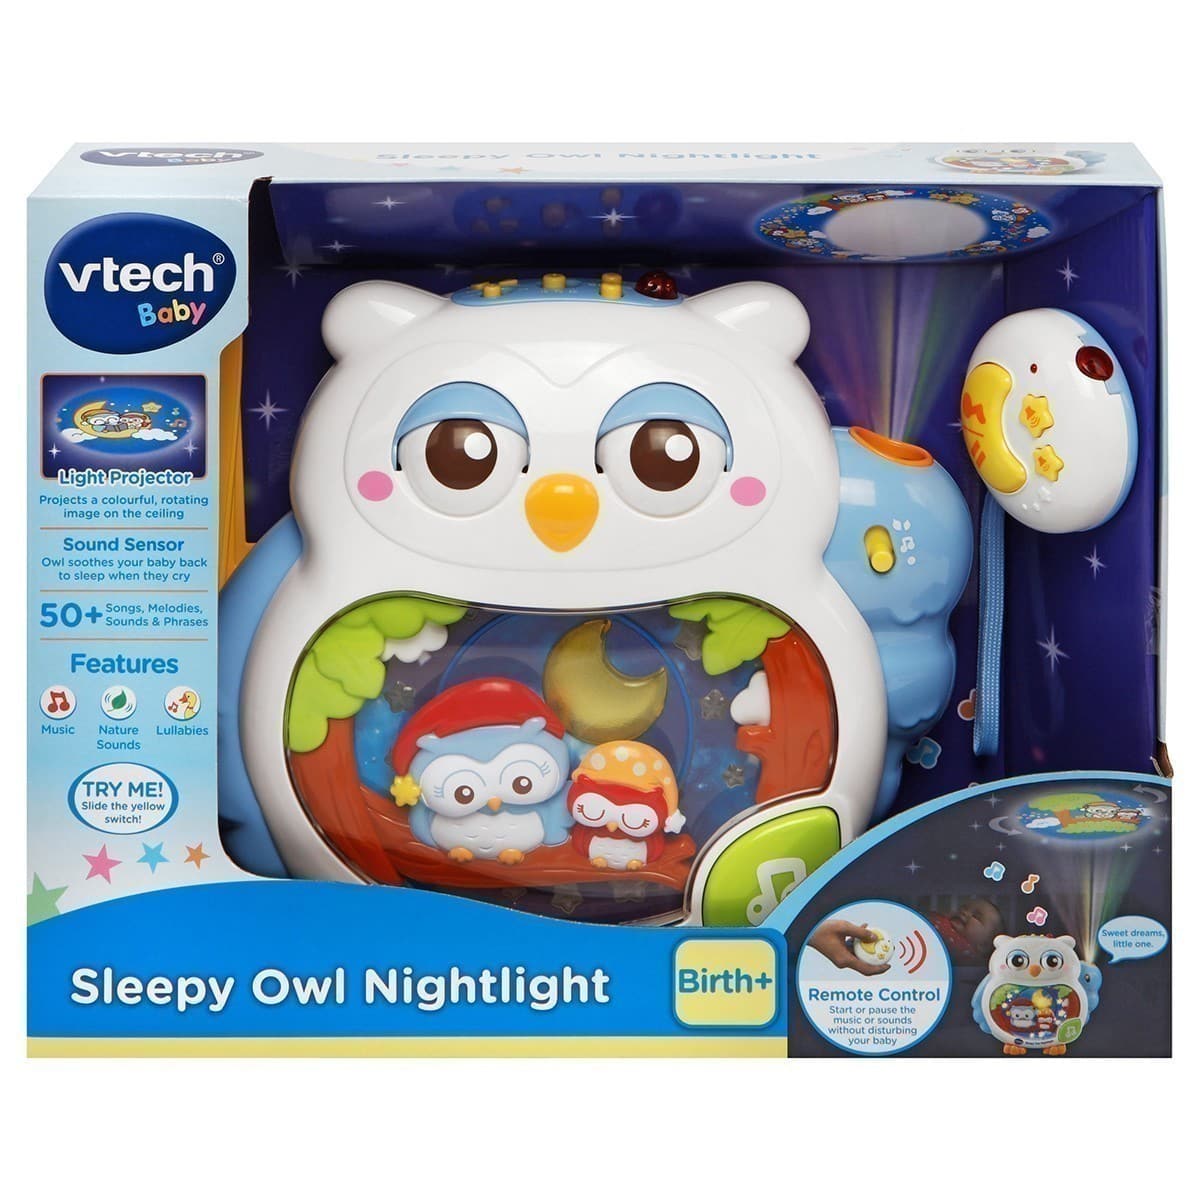 Vtech Baby - Sleepy Owl Nightlight